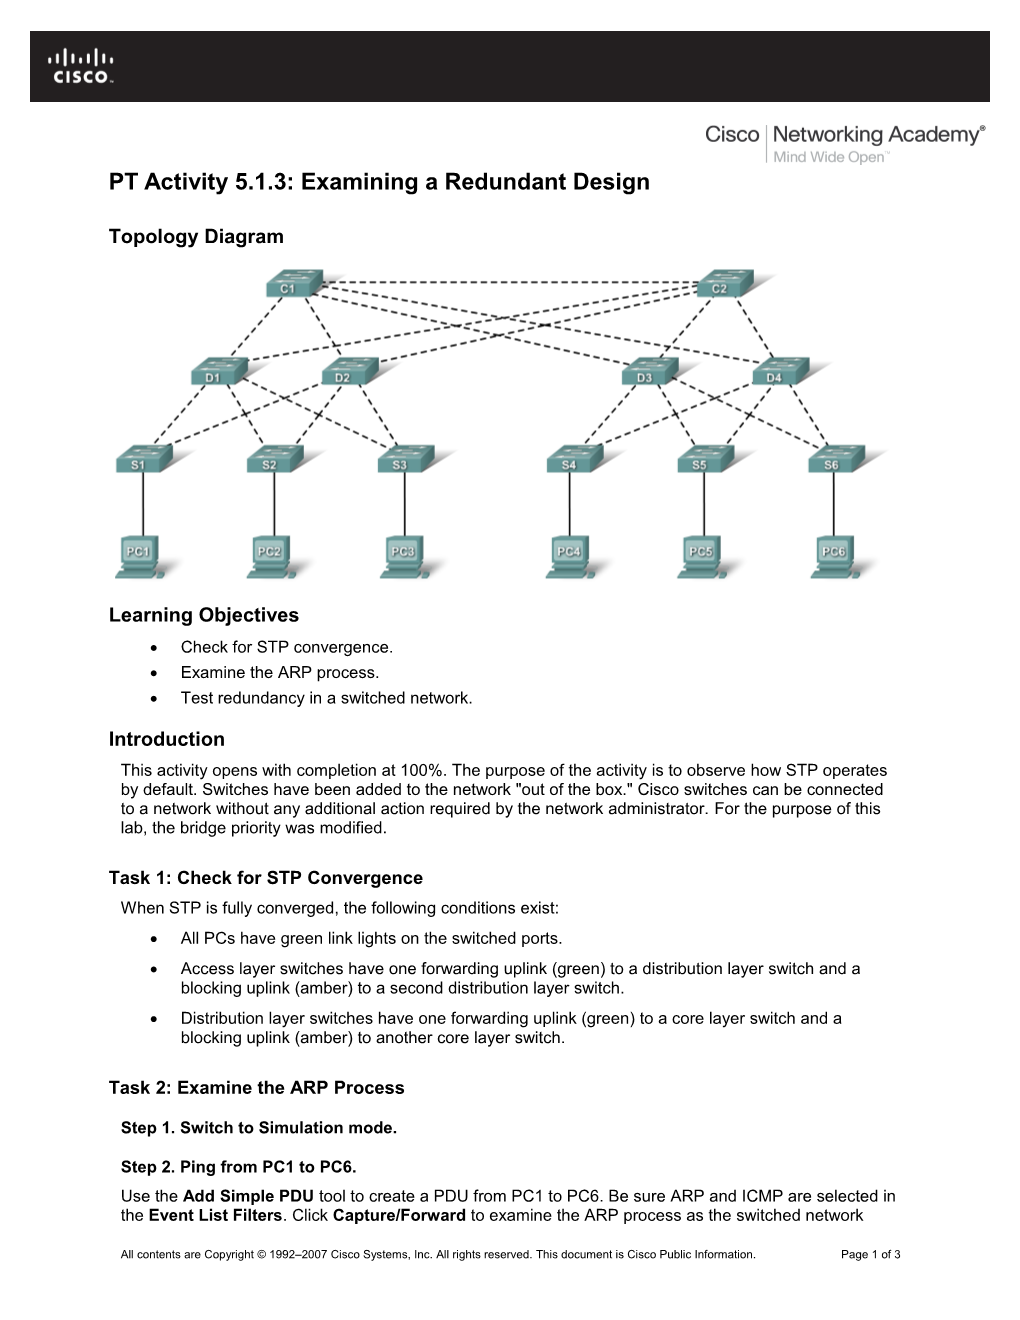 PT Activity 5.1.3: Examining a Redundant Design